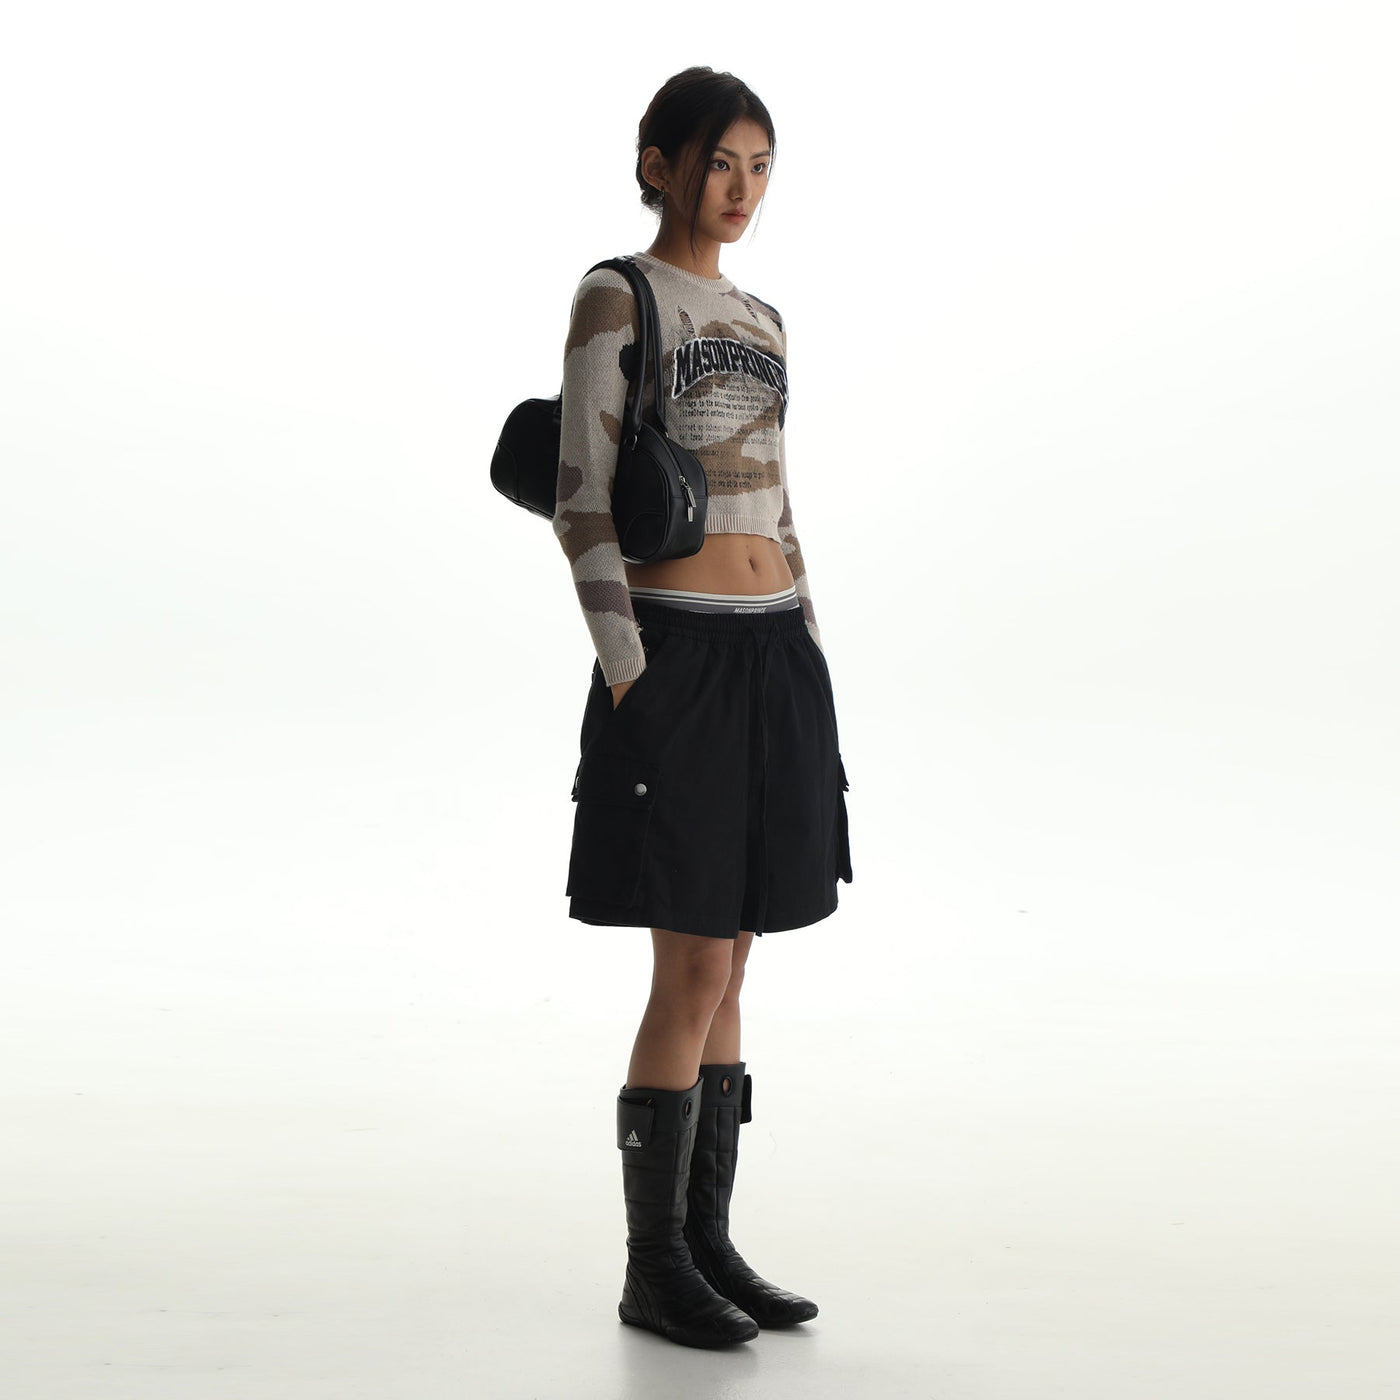 Tie Waist Double Pocket Cargo Shorts Korean Street Fashion Shorts By Mason Prince Shop Online at OH Vault